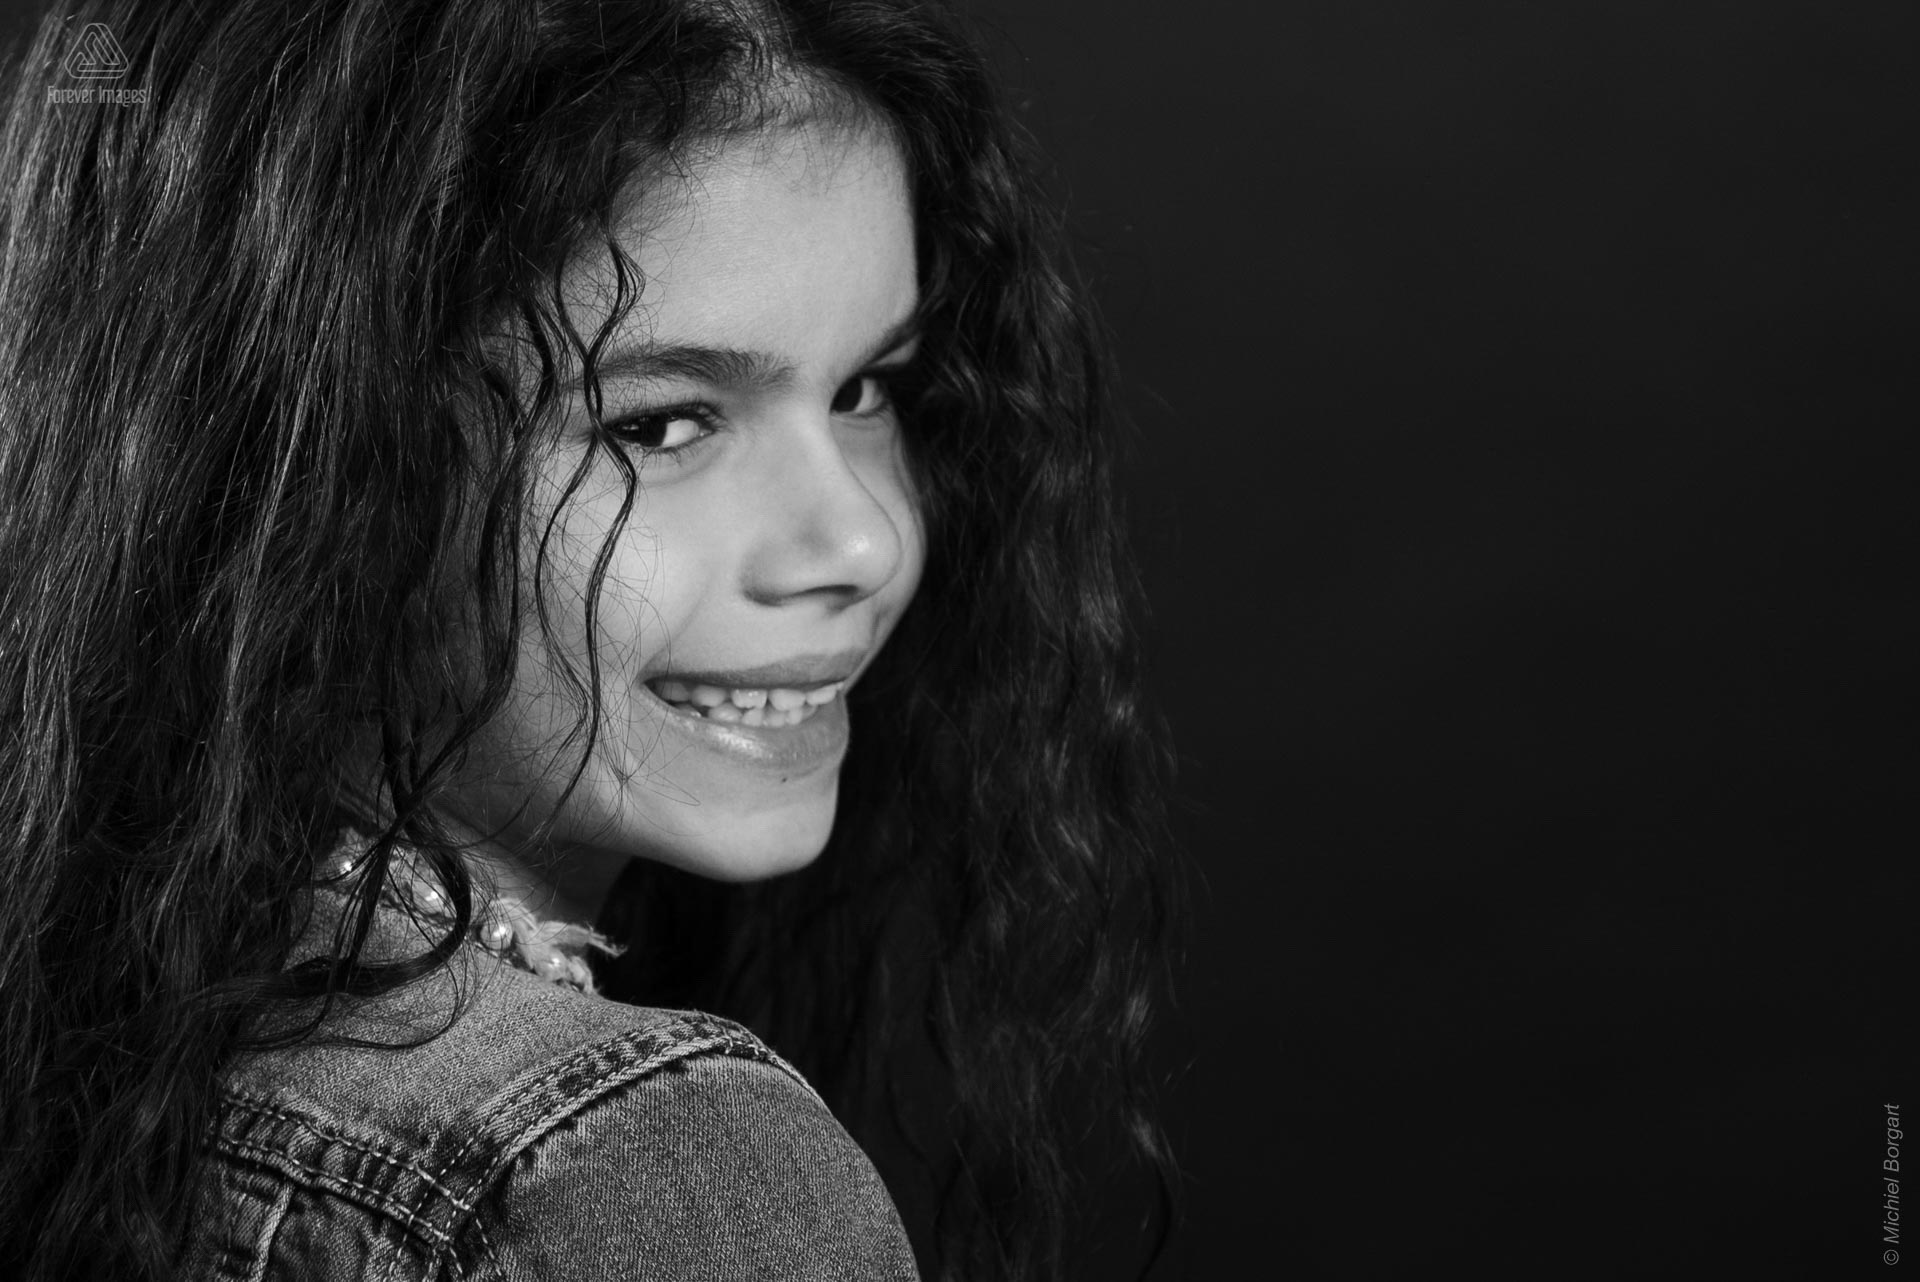 Portrait photo childern black and white B&W girl beautiful smile | Chhaya Grishaver | Portrait Photographer Michiel Borgart - Forever Images.